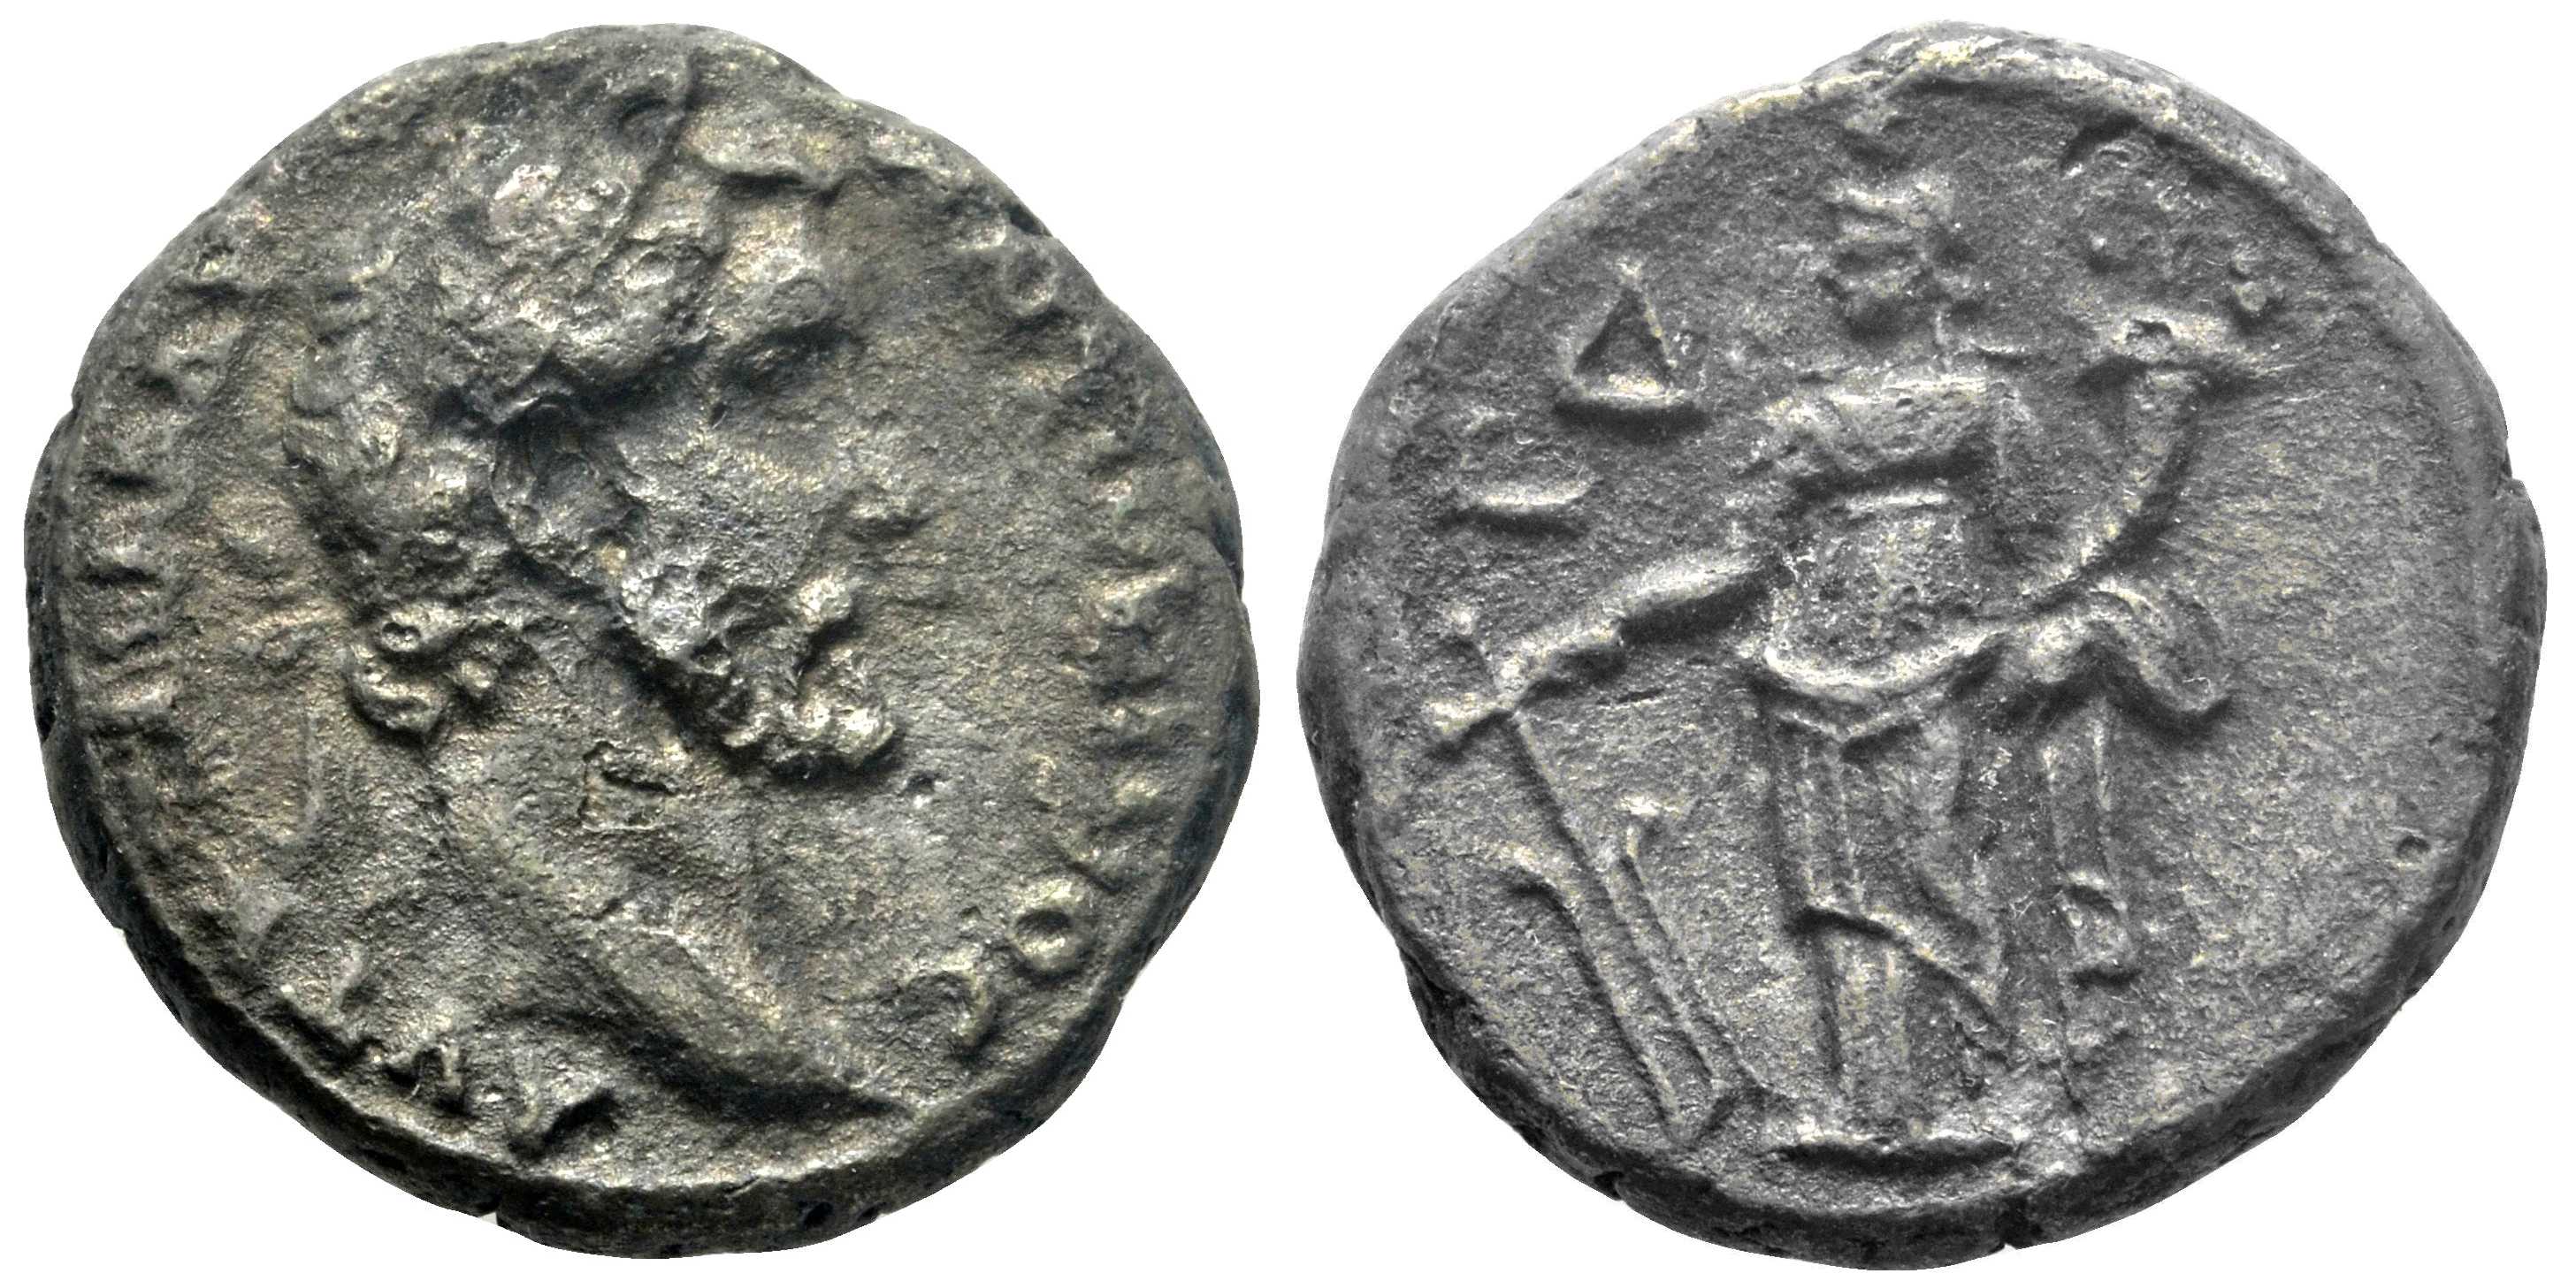 5851 Alexandria Aegyptus Antoninus Pius AE